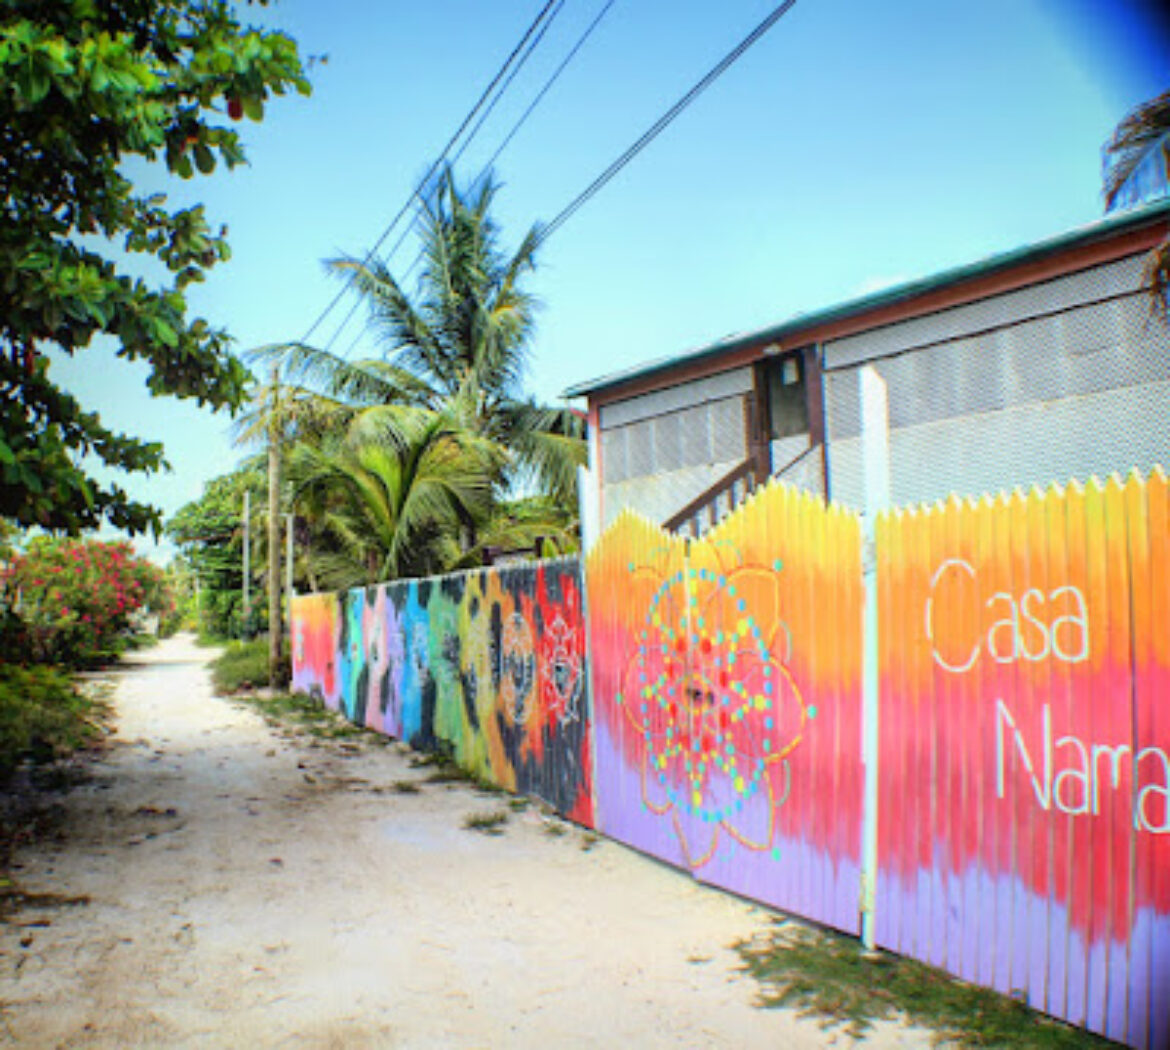 remaxvipbelize: Casa Nama Coloured wall